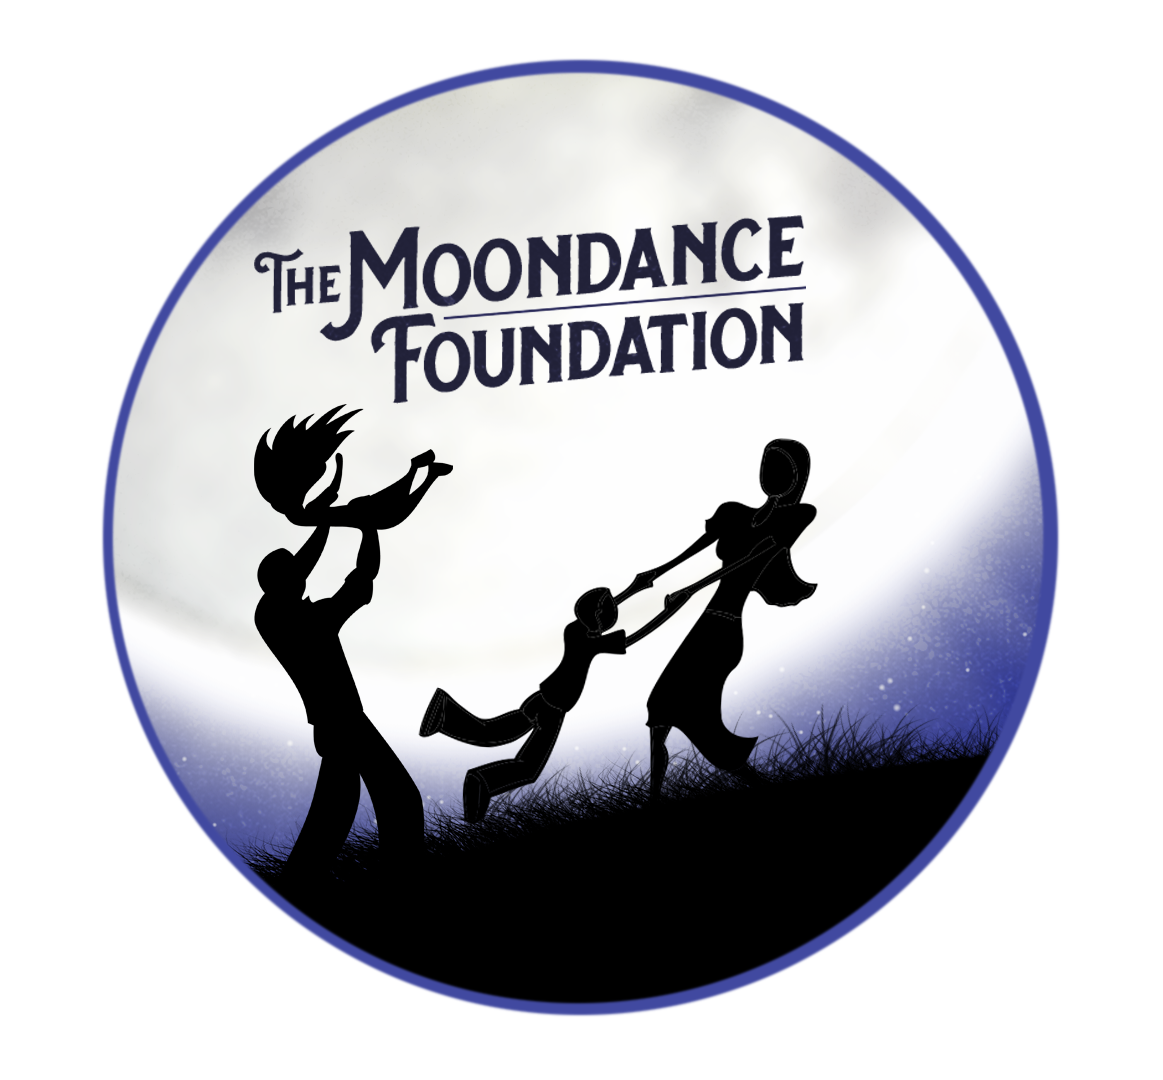 Funding: Moondance Foundation